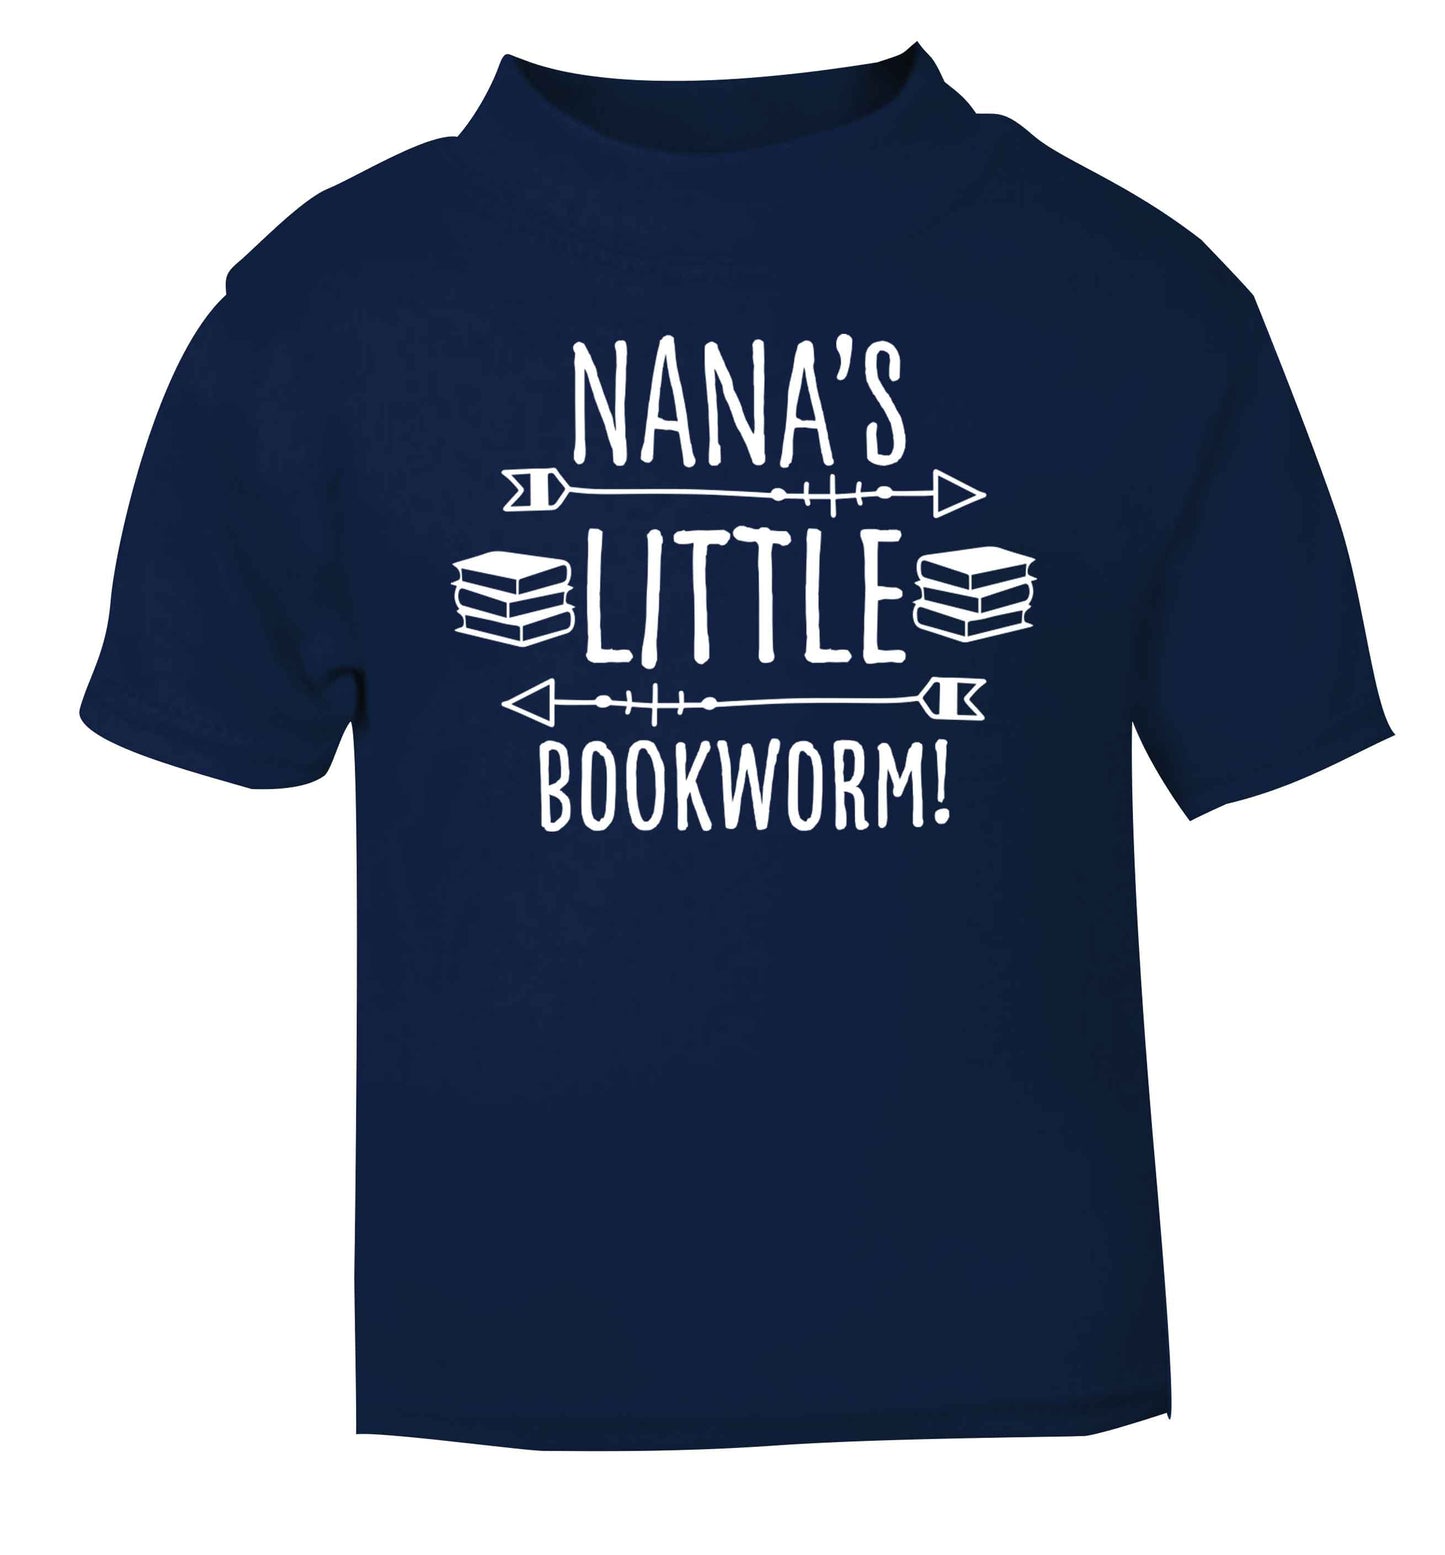 Nana's little bookworm navy baby toddler Tshirt 2 Years